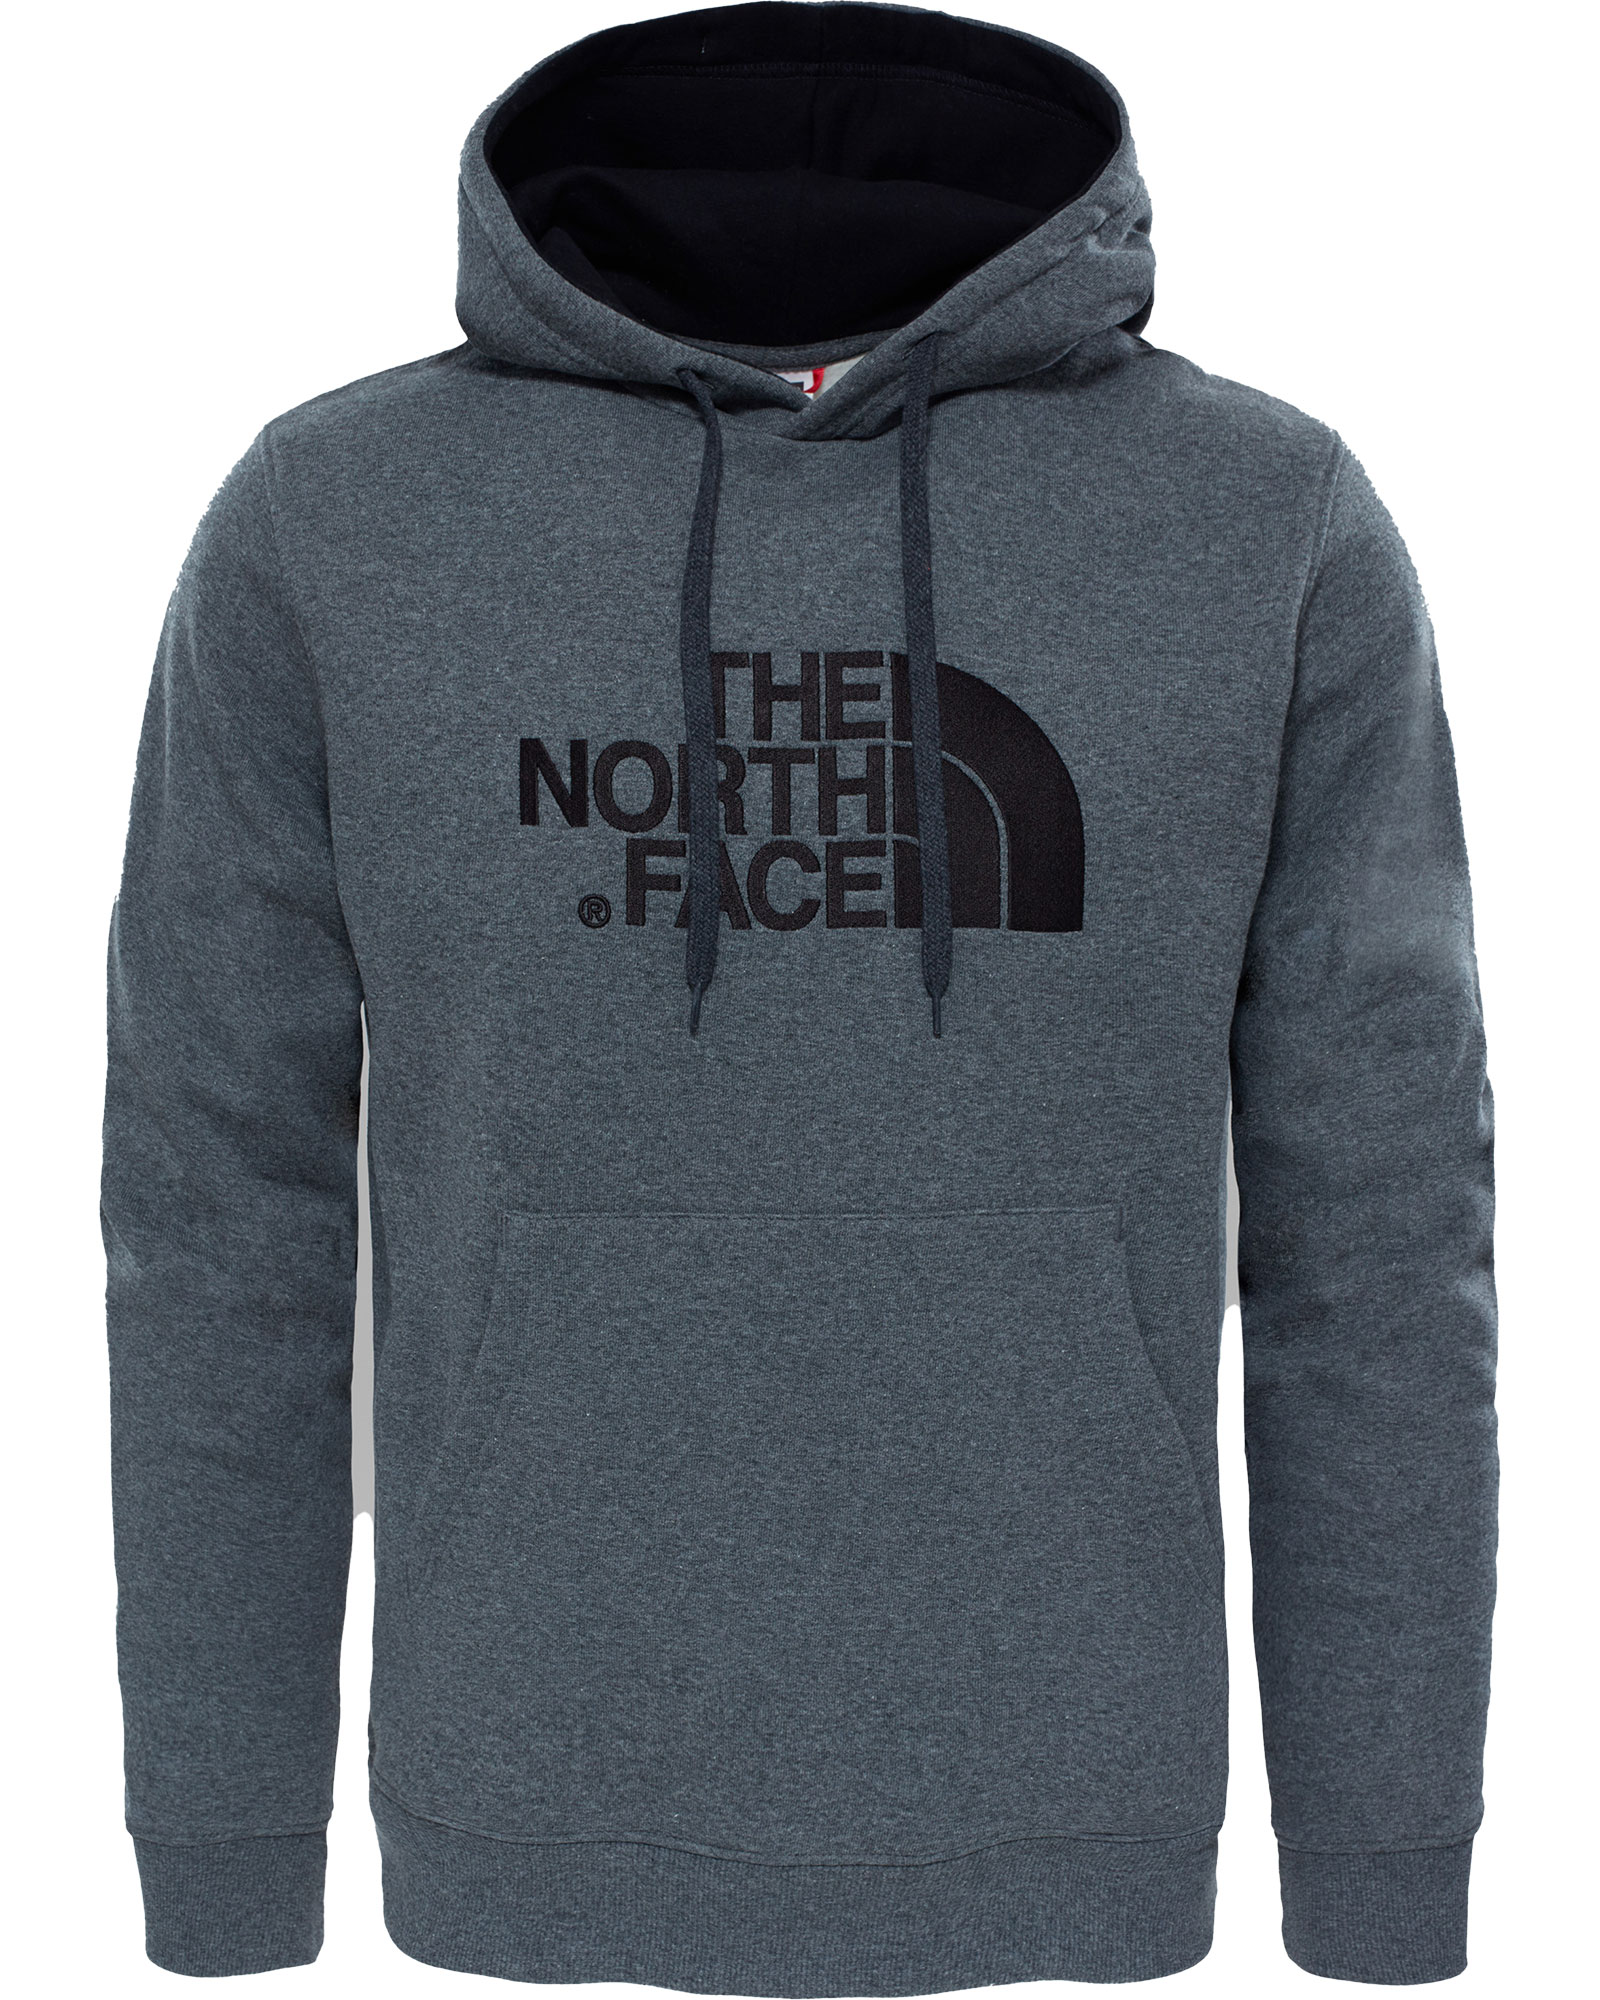 The North Face Drew Peak Men’s Hoodie - TNF Medium Grey Heather XXL